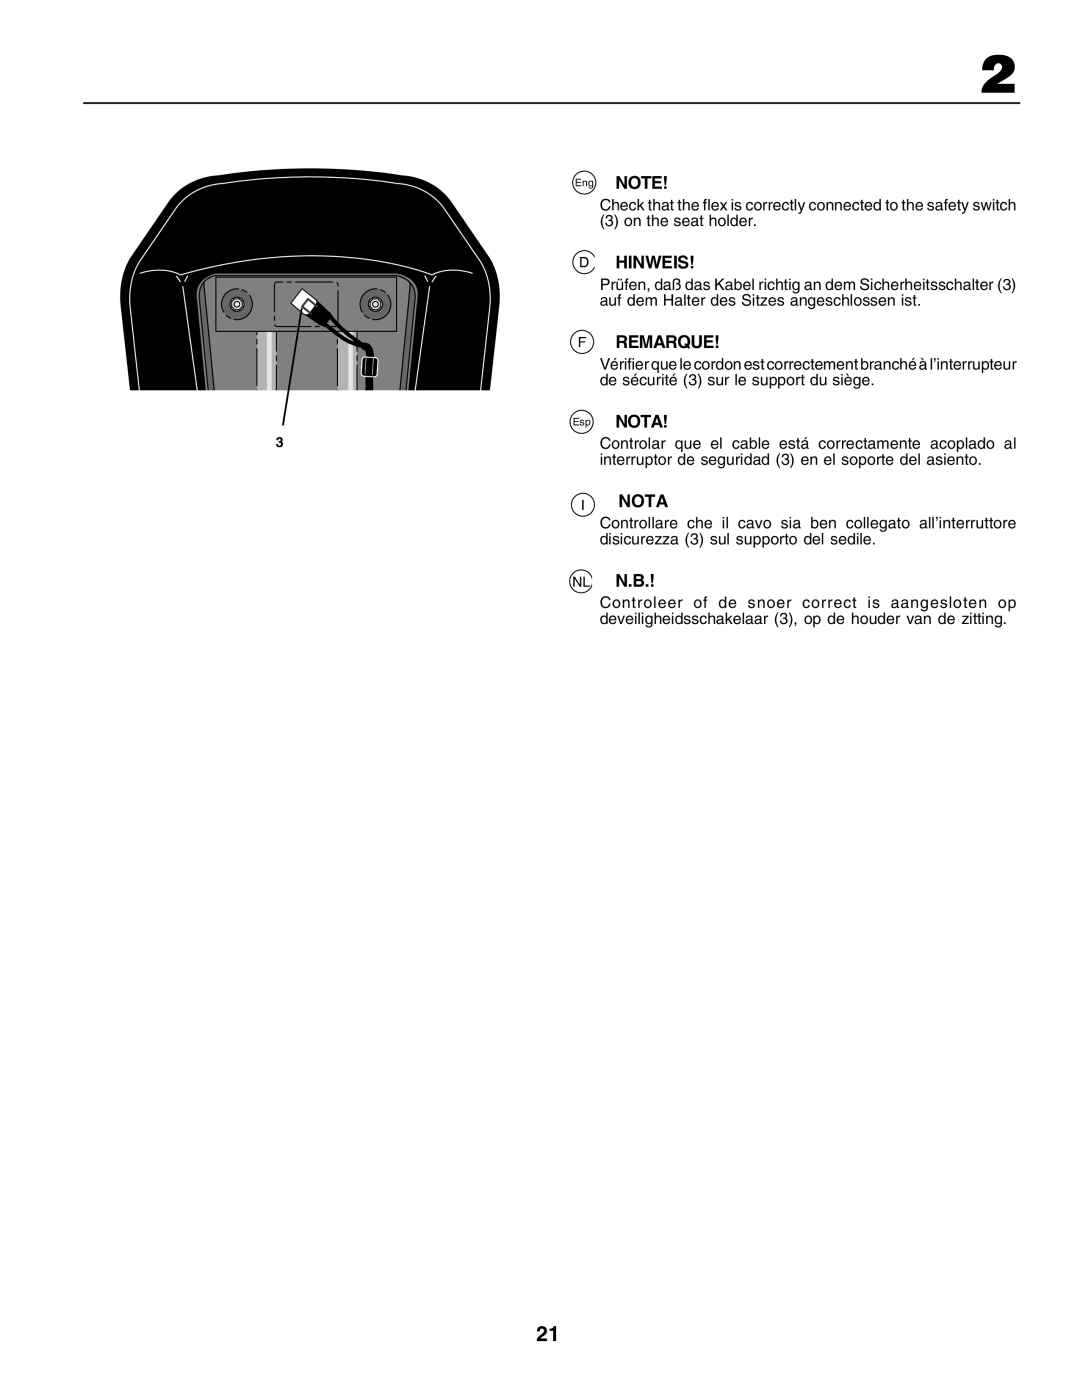 Husqvarna GTH250 instruction manual Hinweis, Remarque, Nota, on the seat holder 